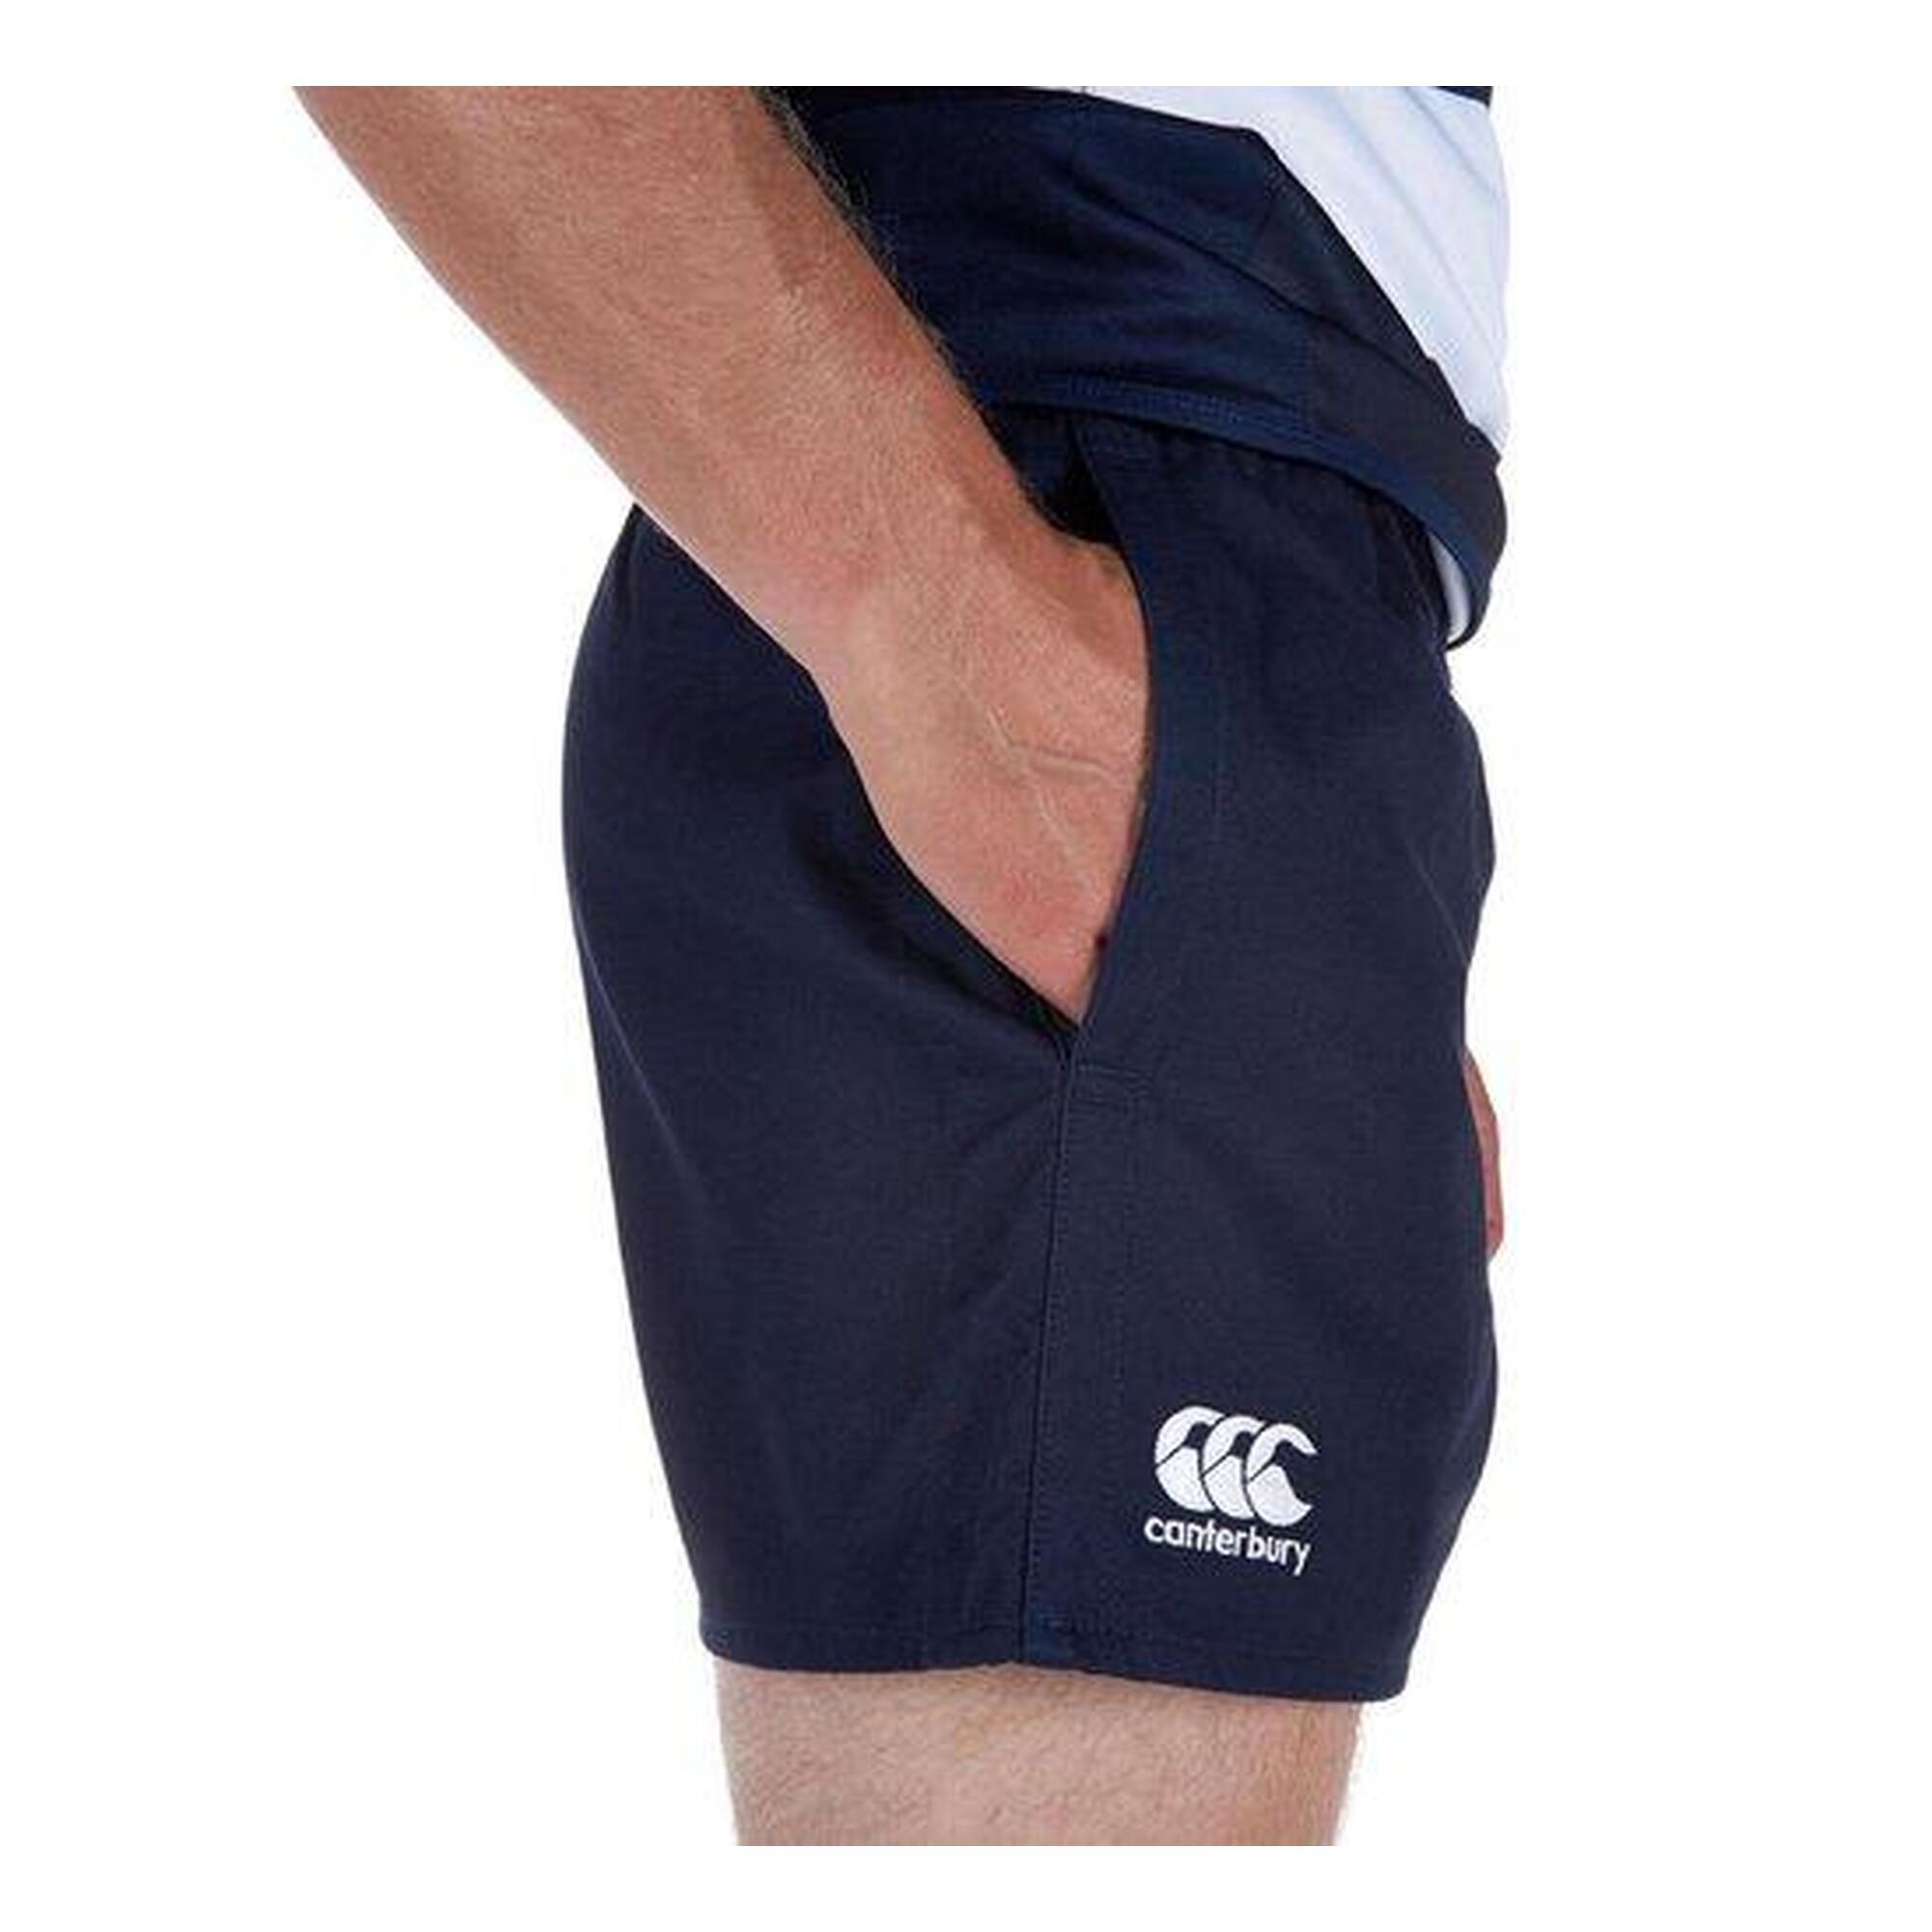 Pantalon de rugby - hommes Adultes Marine / Blanc